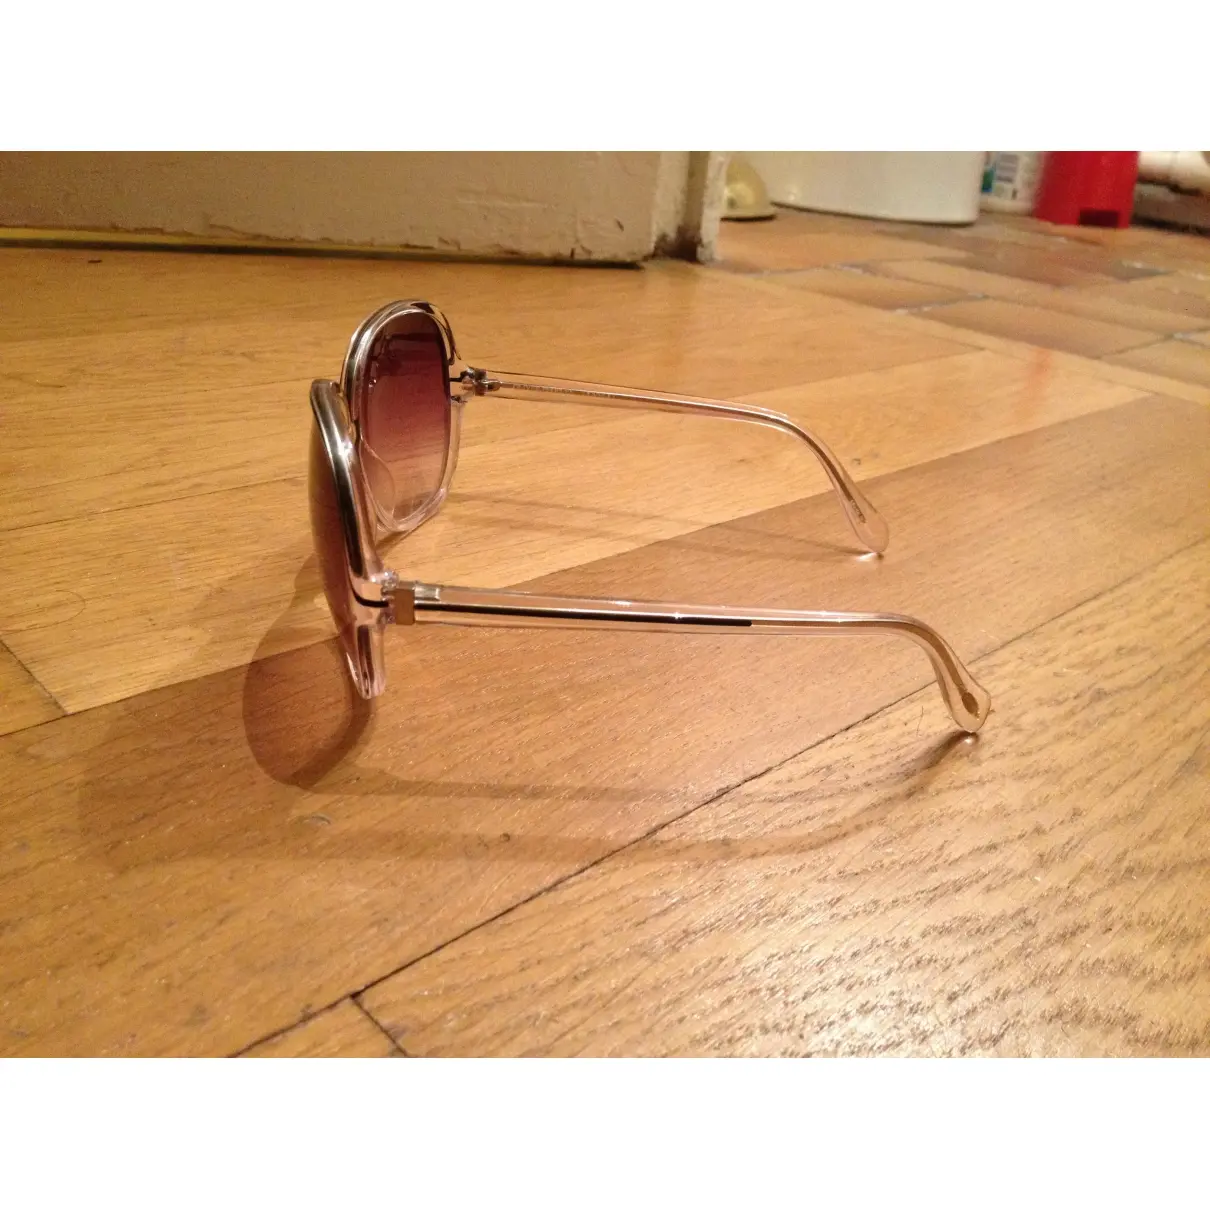 Oliver Peoples Blue Plastic Sunglasses for sale